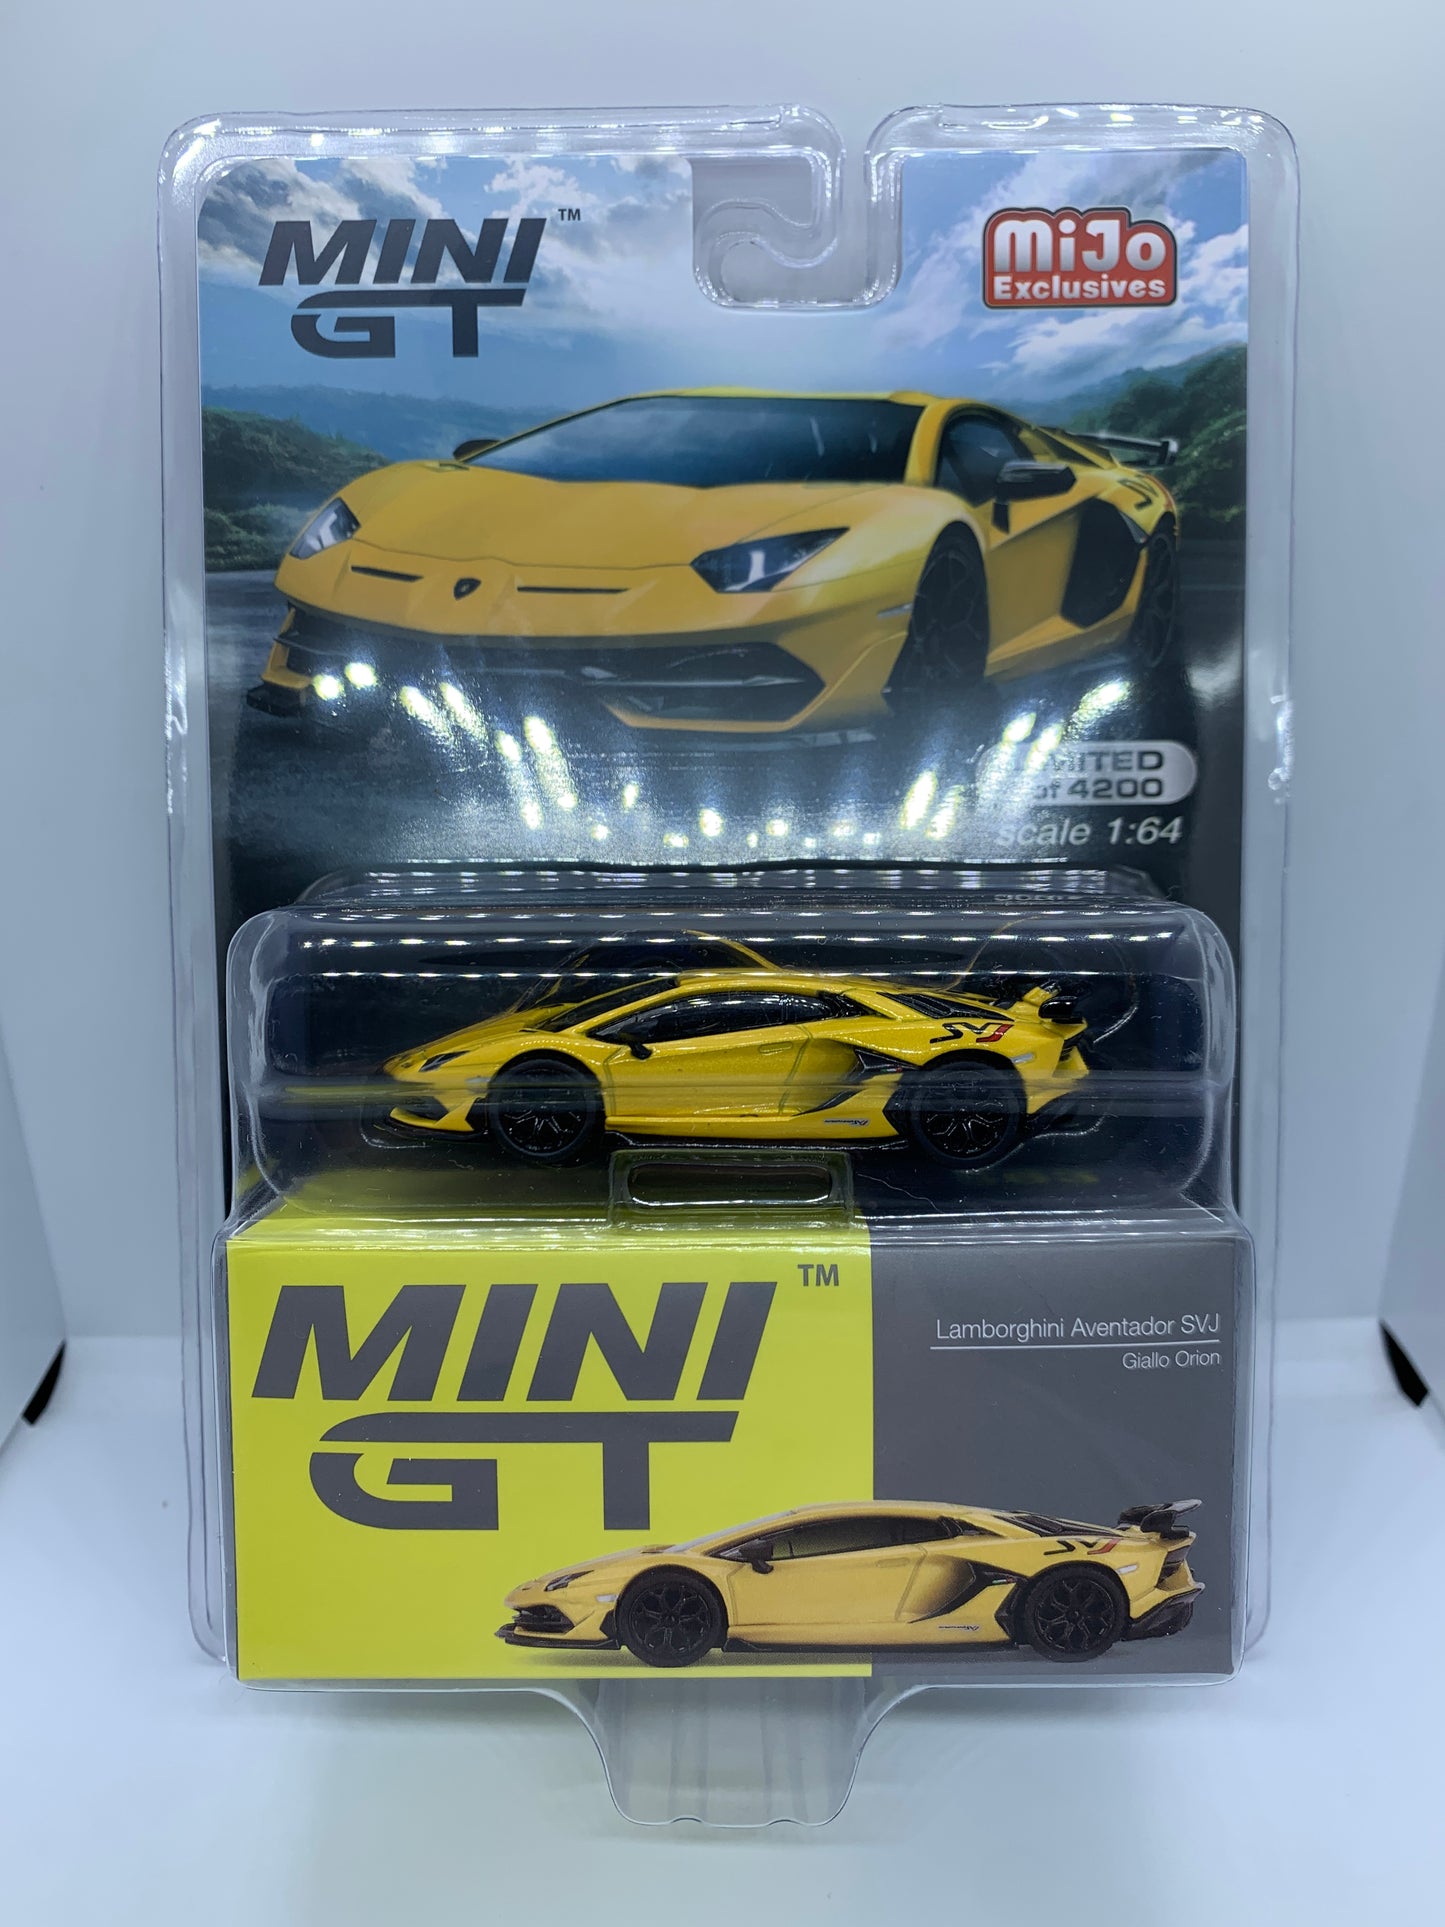 MINI GT - Lamborghini Aventador SVJ Giallo Orion - Display Blister Packaging